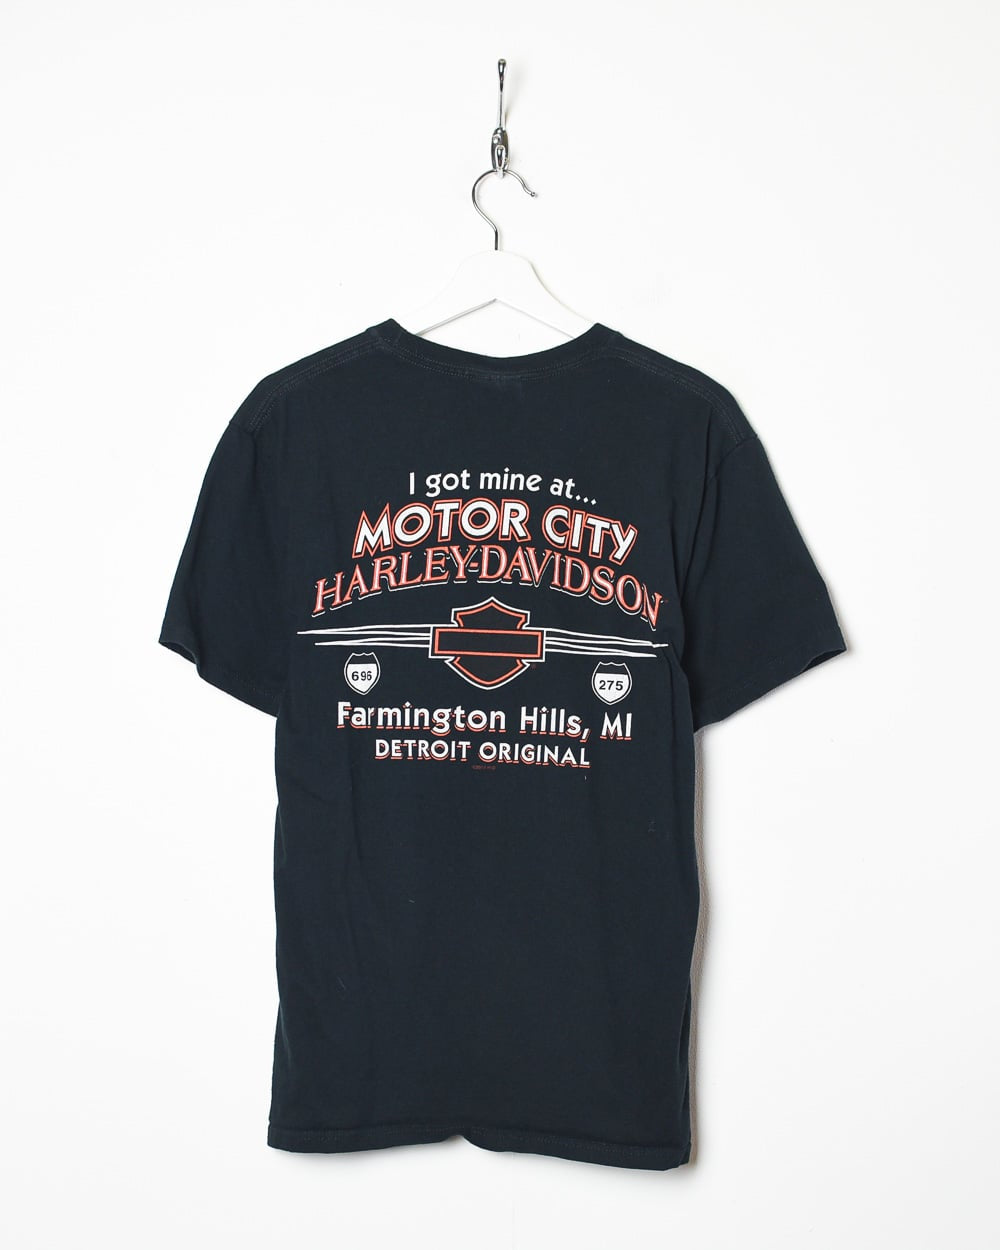 Black Harley Davidson Life Begins When You Get One T-Shirt - Medium